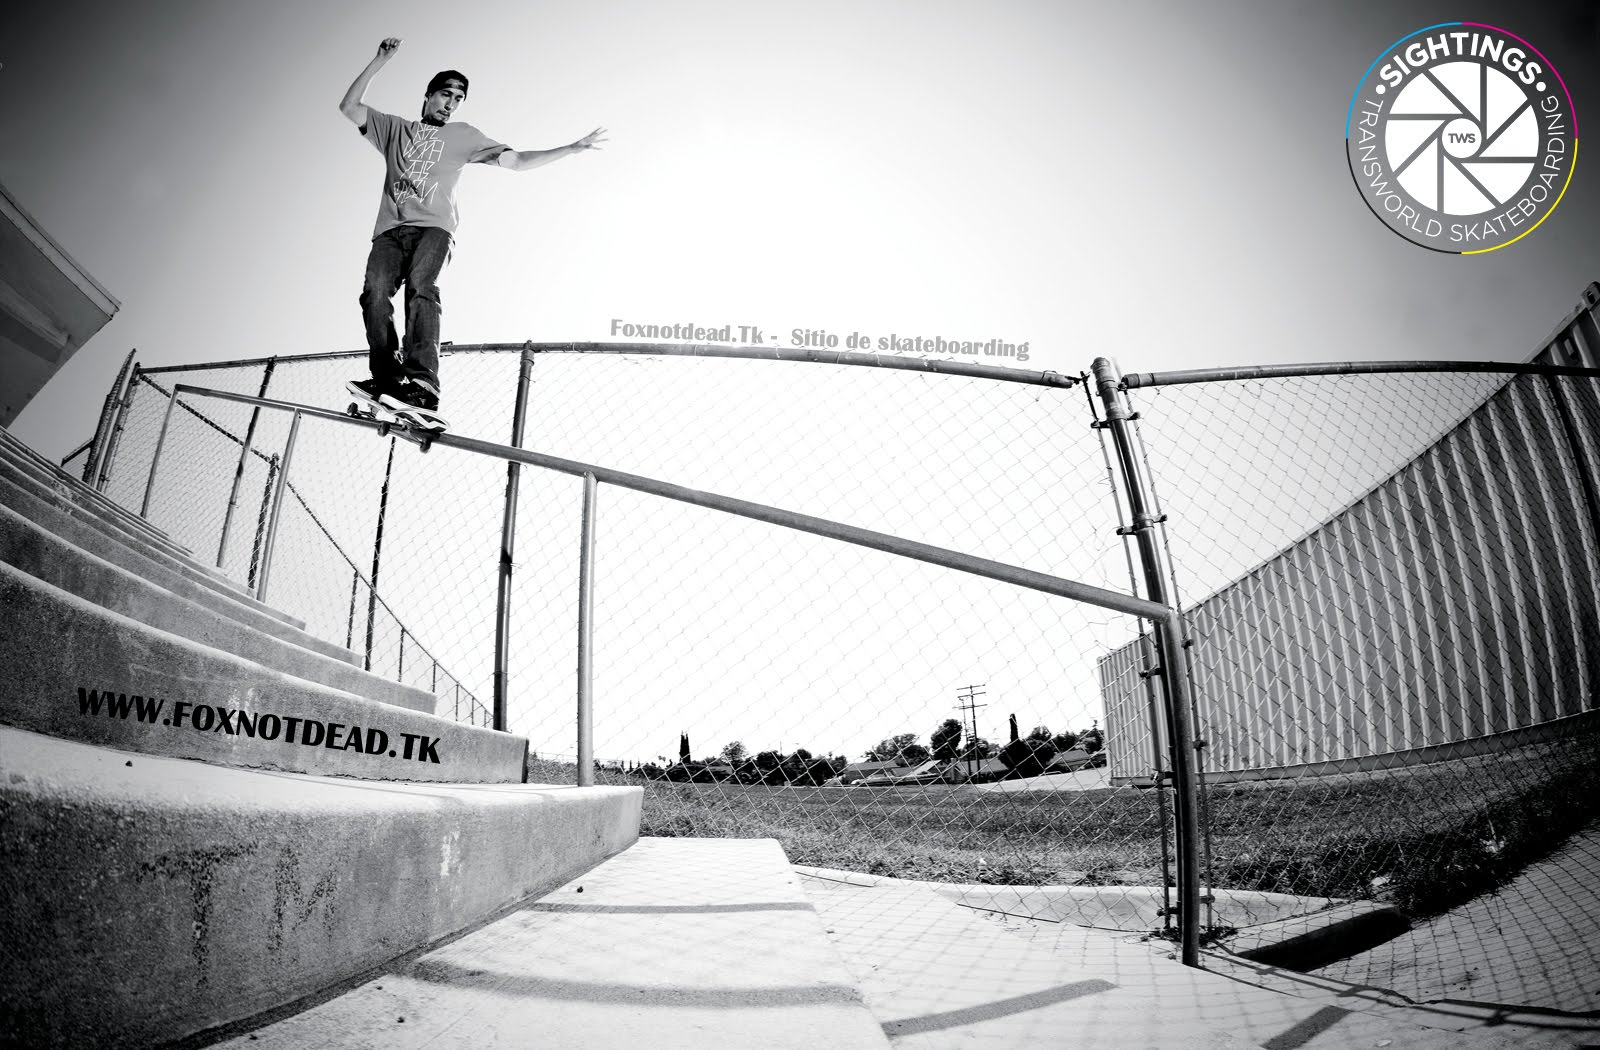 Wallpapers Sk8 - Tony Cervantes - Foxnotdead Skateboarding